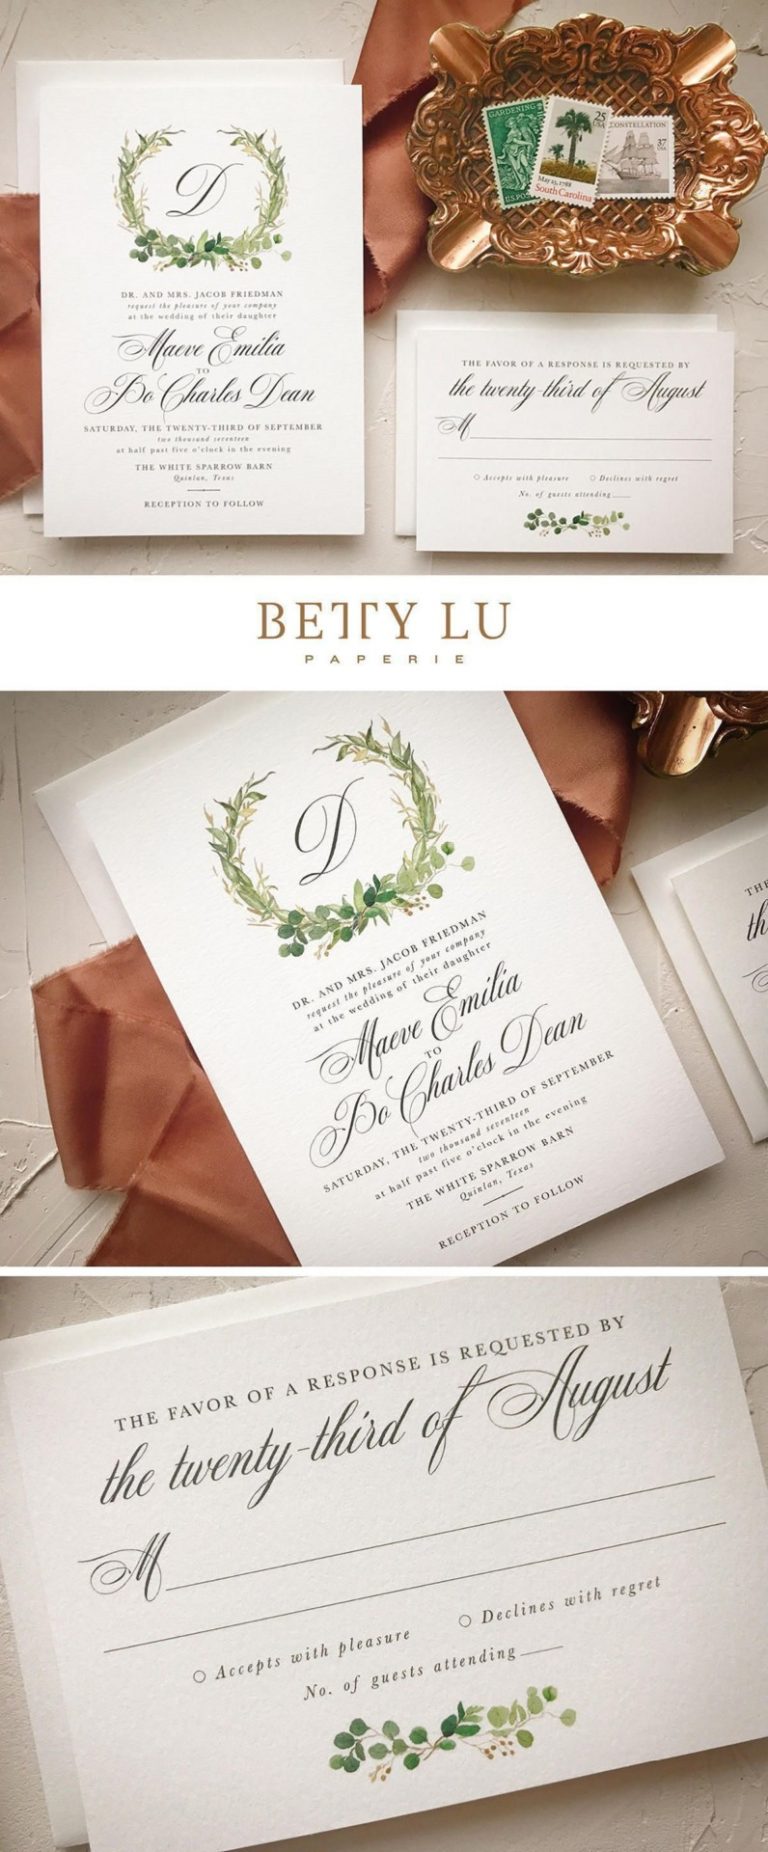 Greenery wedding invitations ideas